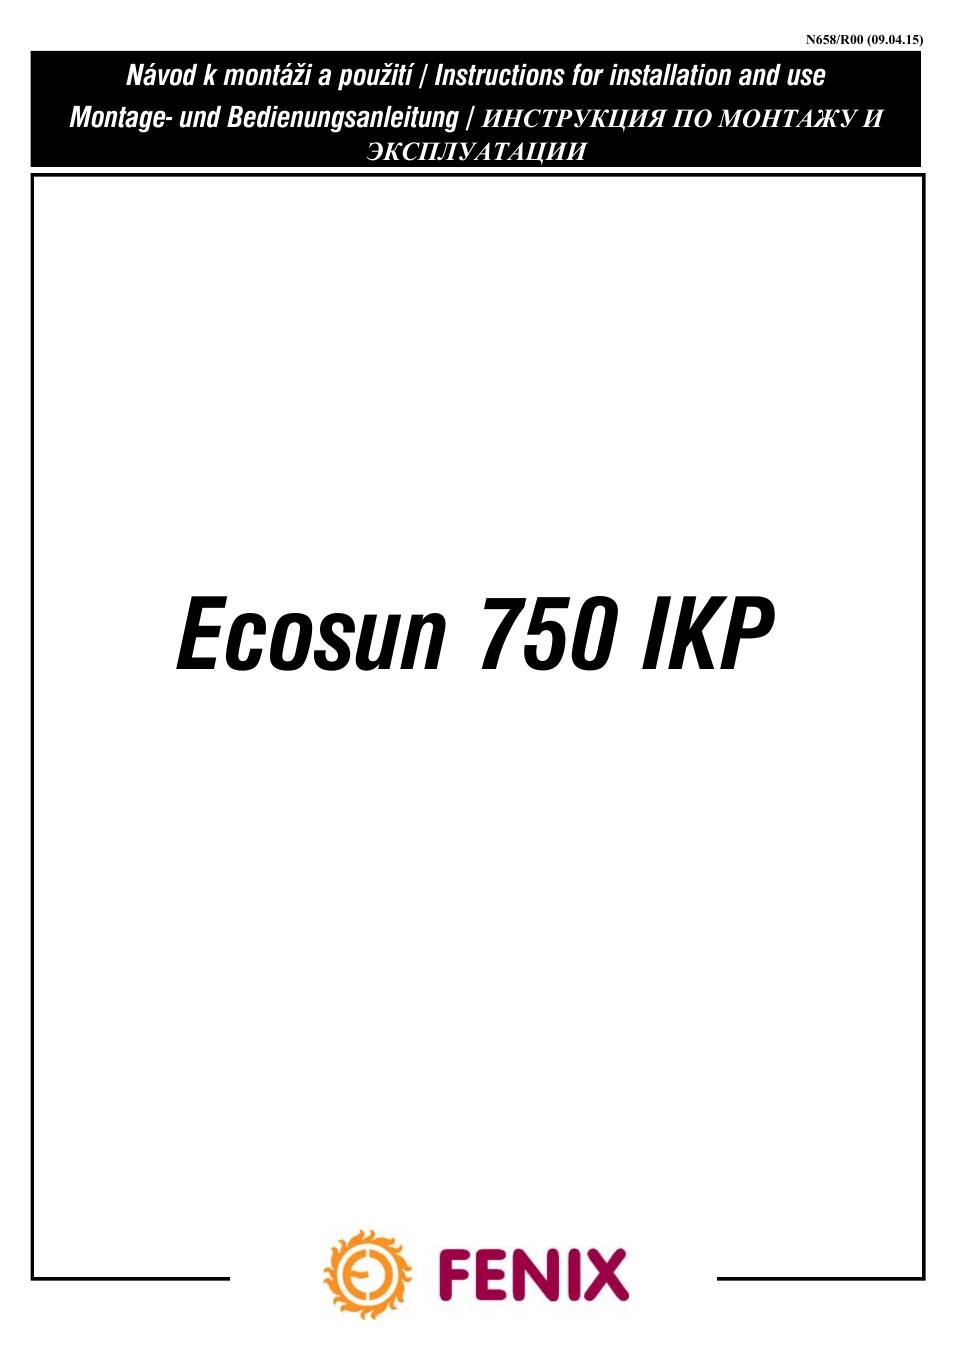 Ecosun 750 IKP